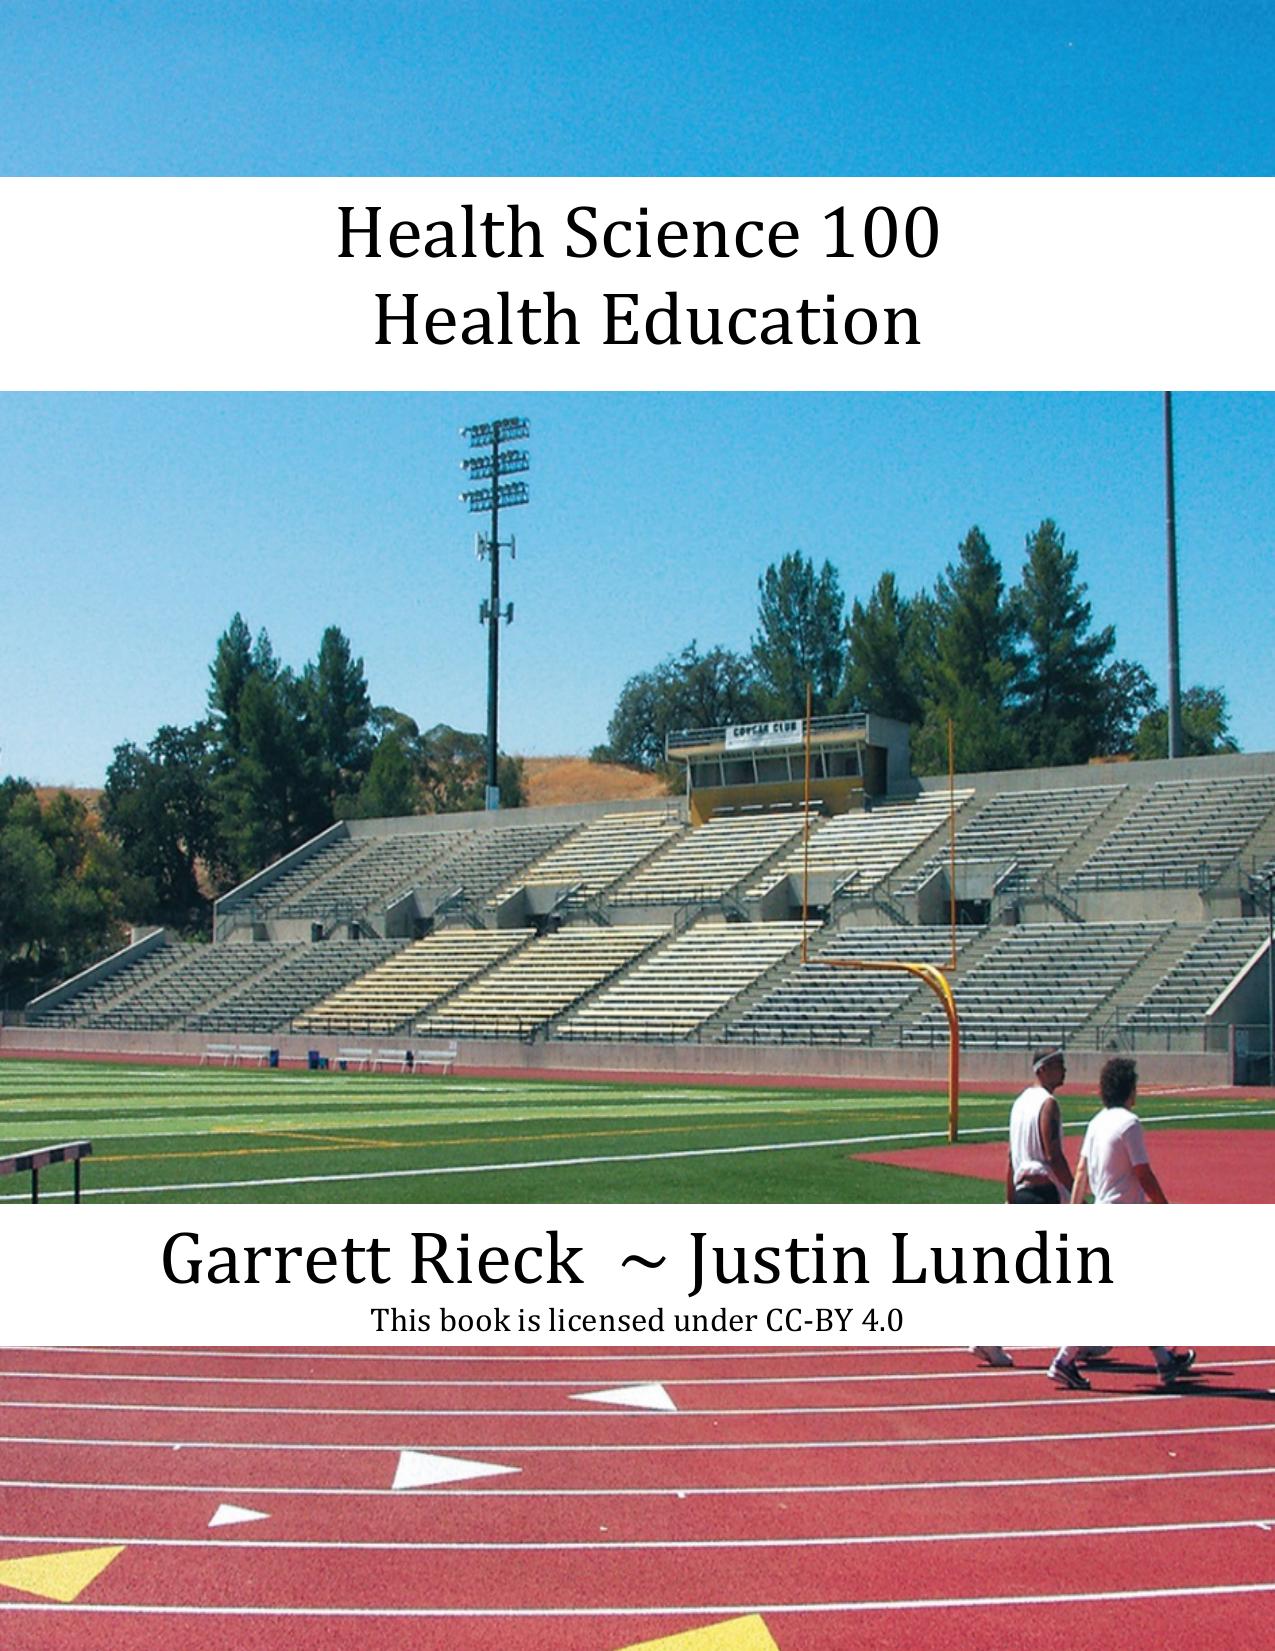 Health Science 100 Health Education Garrett Rieck 2017